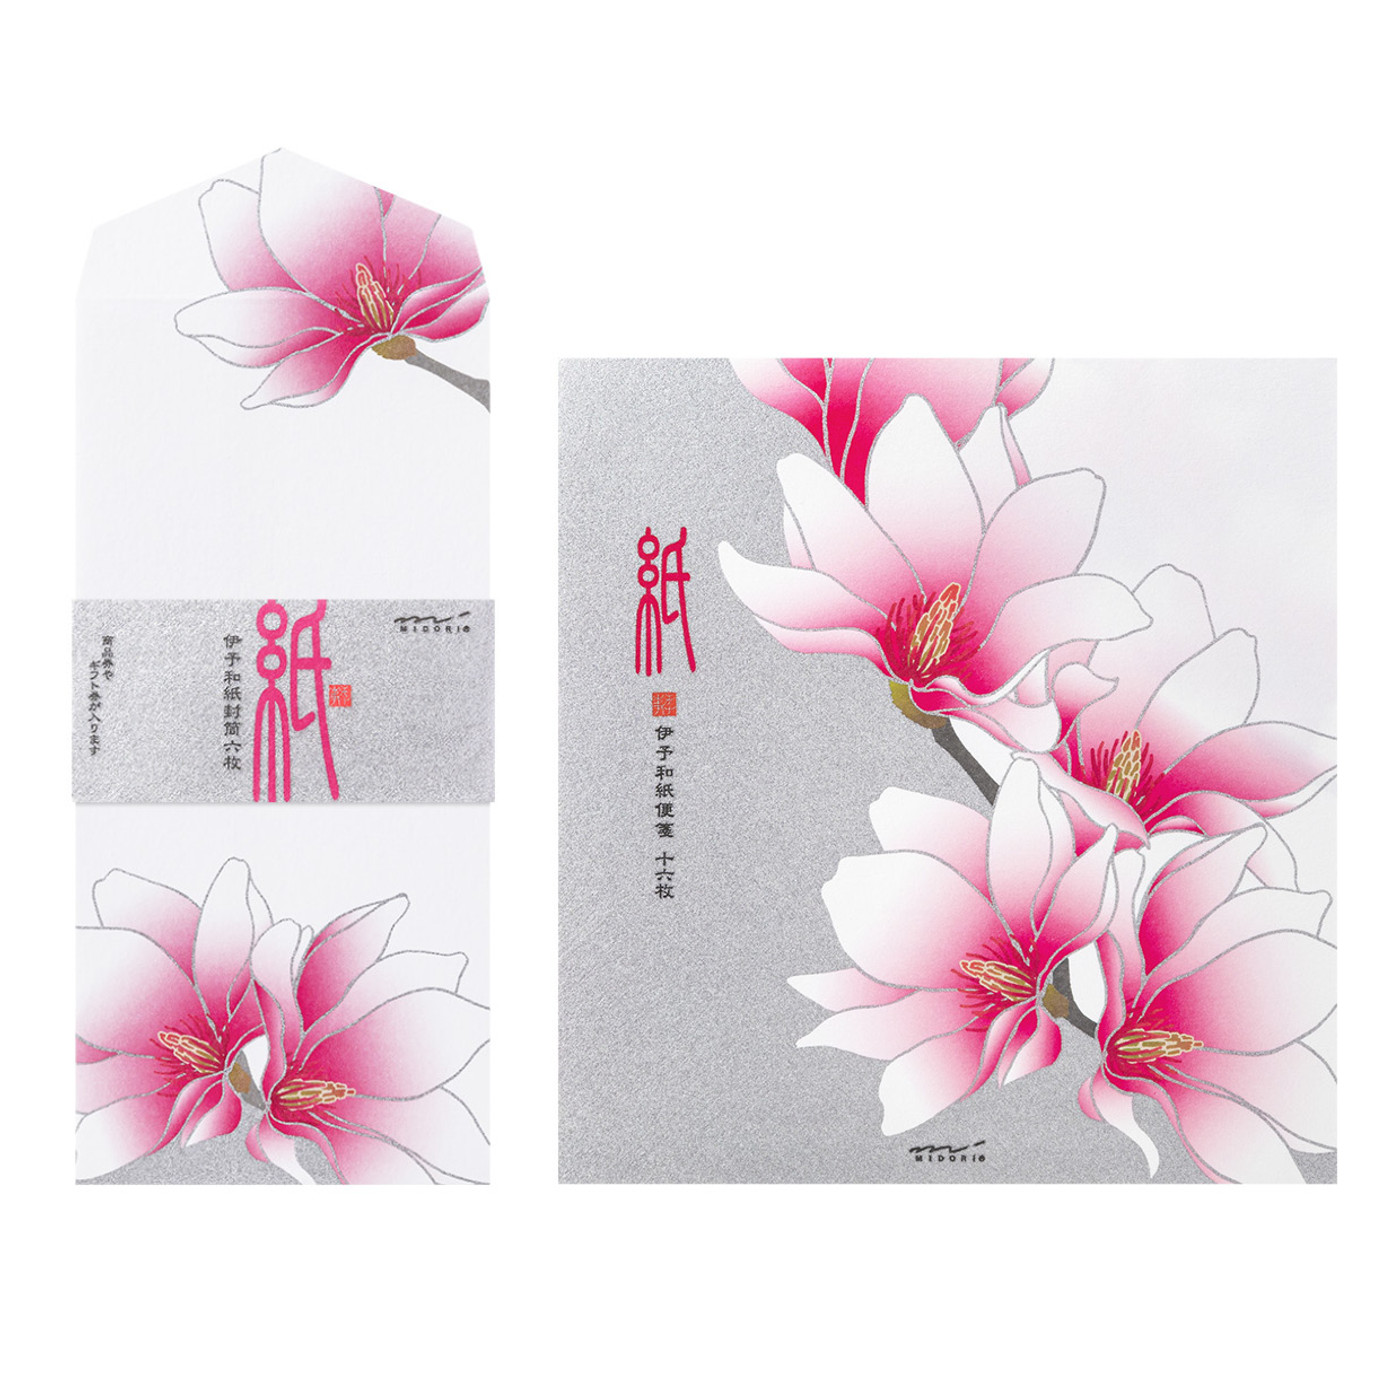 Midori Kami letter writing set - pink magnolia